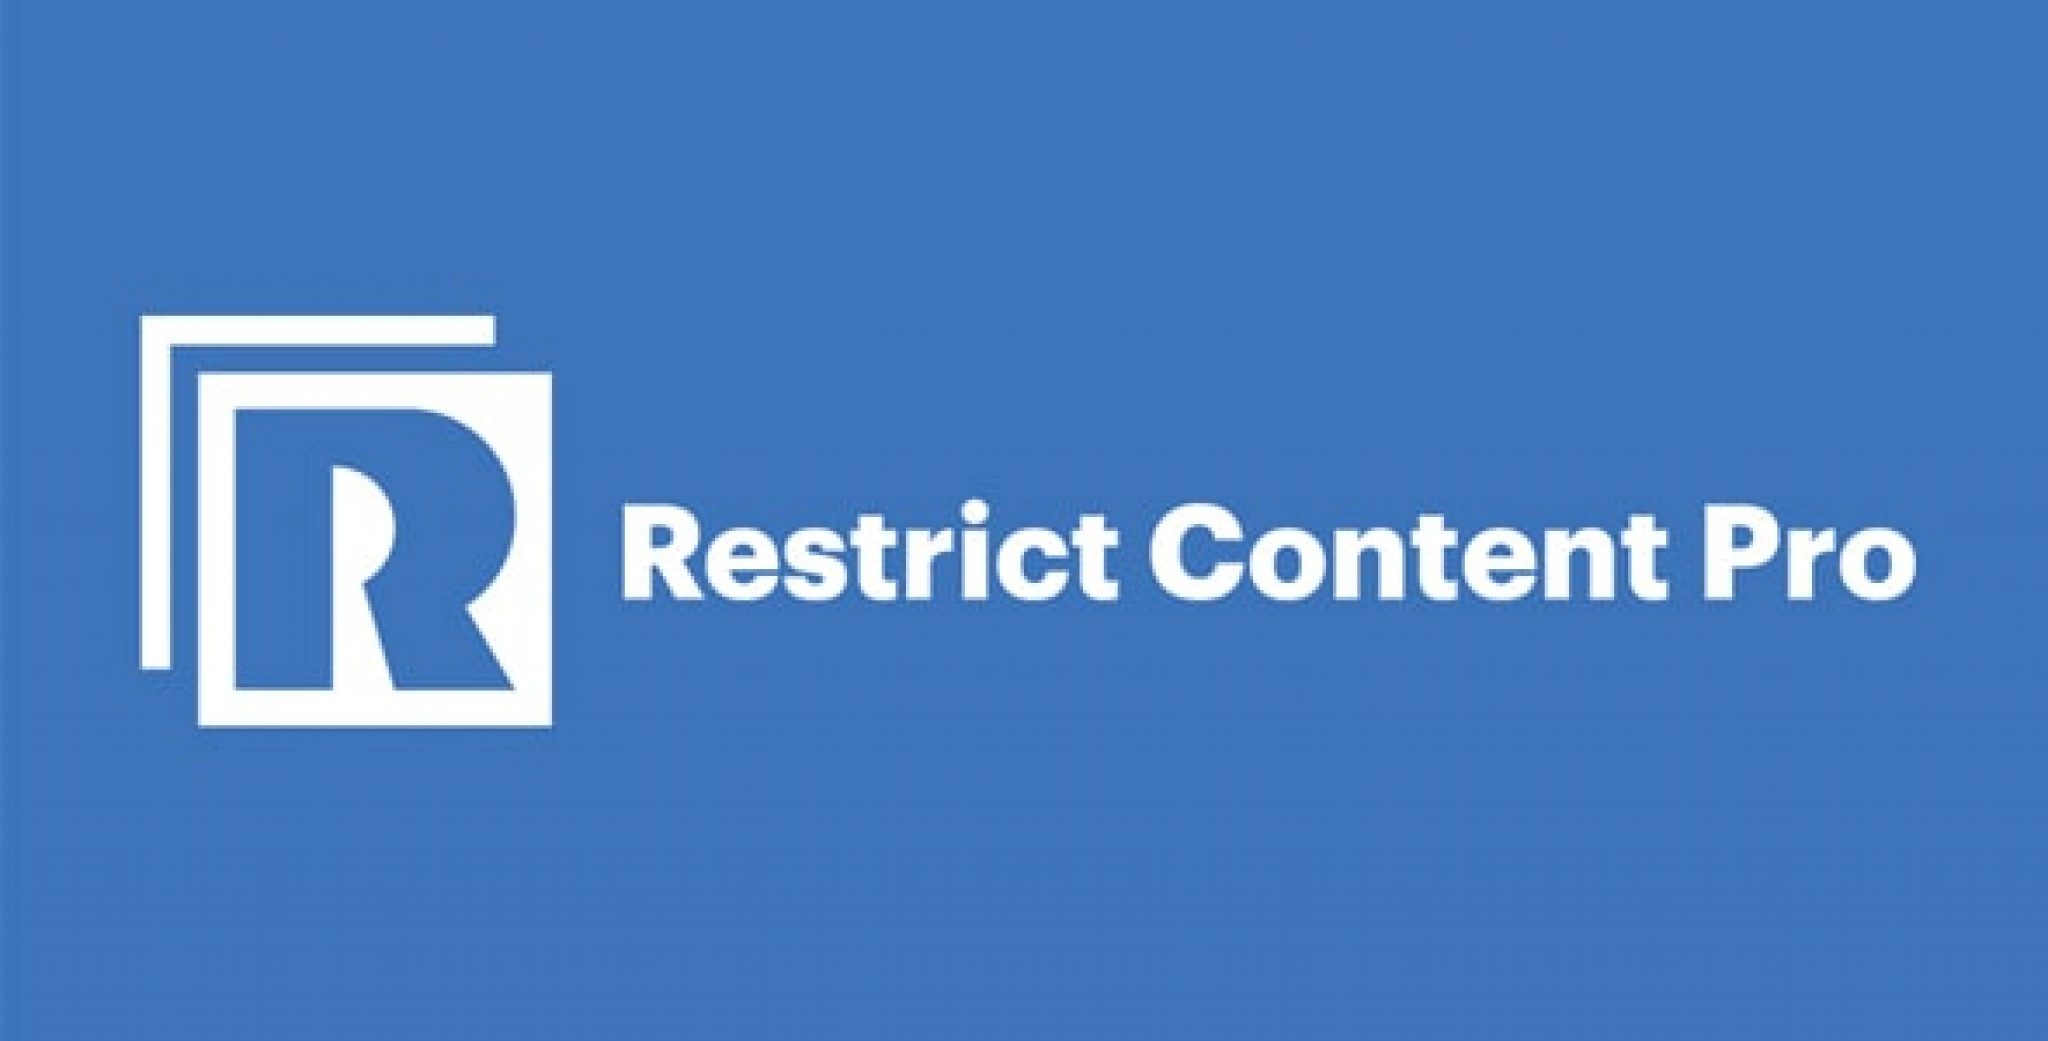 Pro content ru. Restrict. Restrict content Pro Clipart. Restricted content.